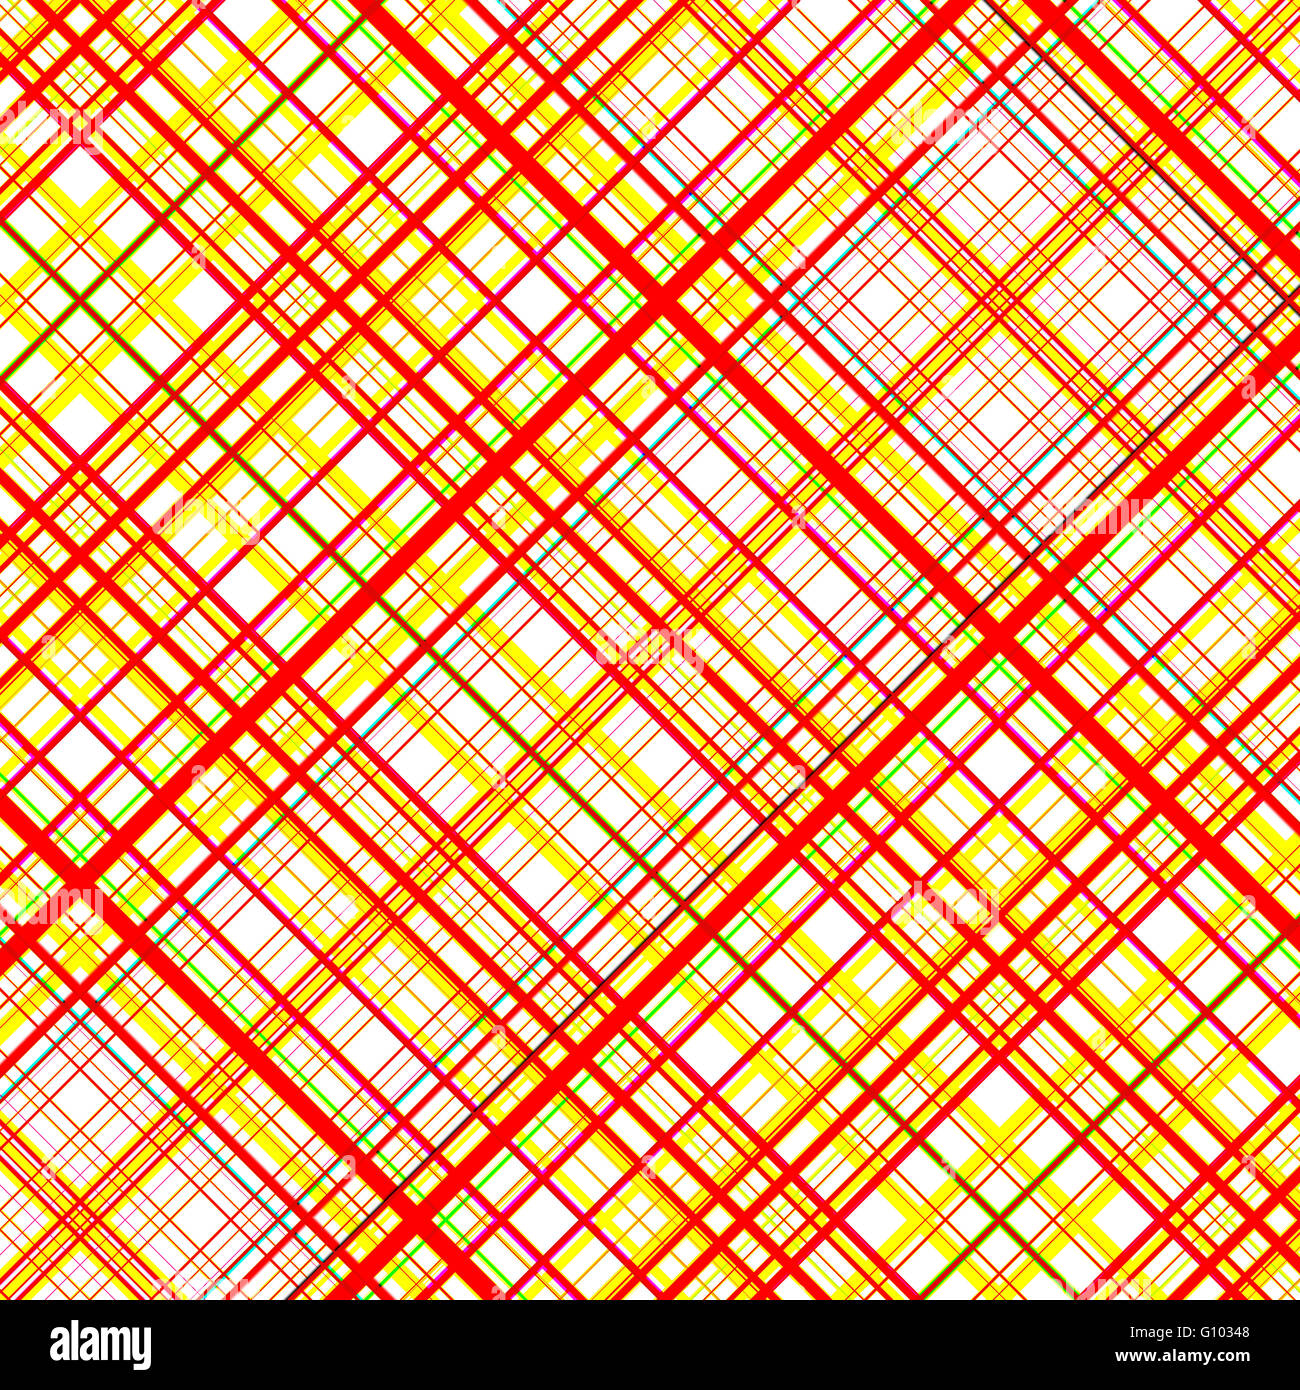 Orange and yellow vibrant colours diagonal grid pattern. Stock Photo